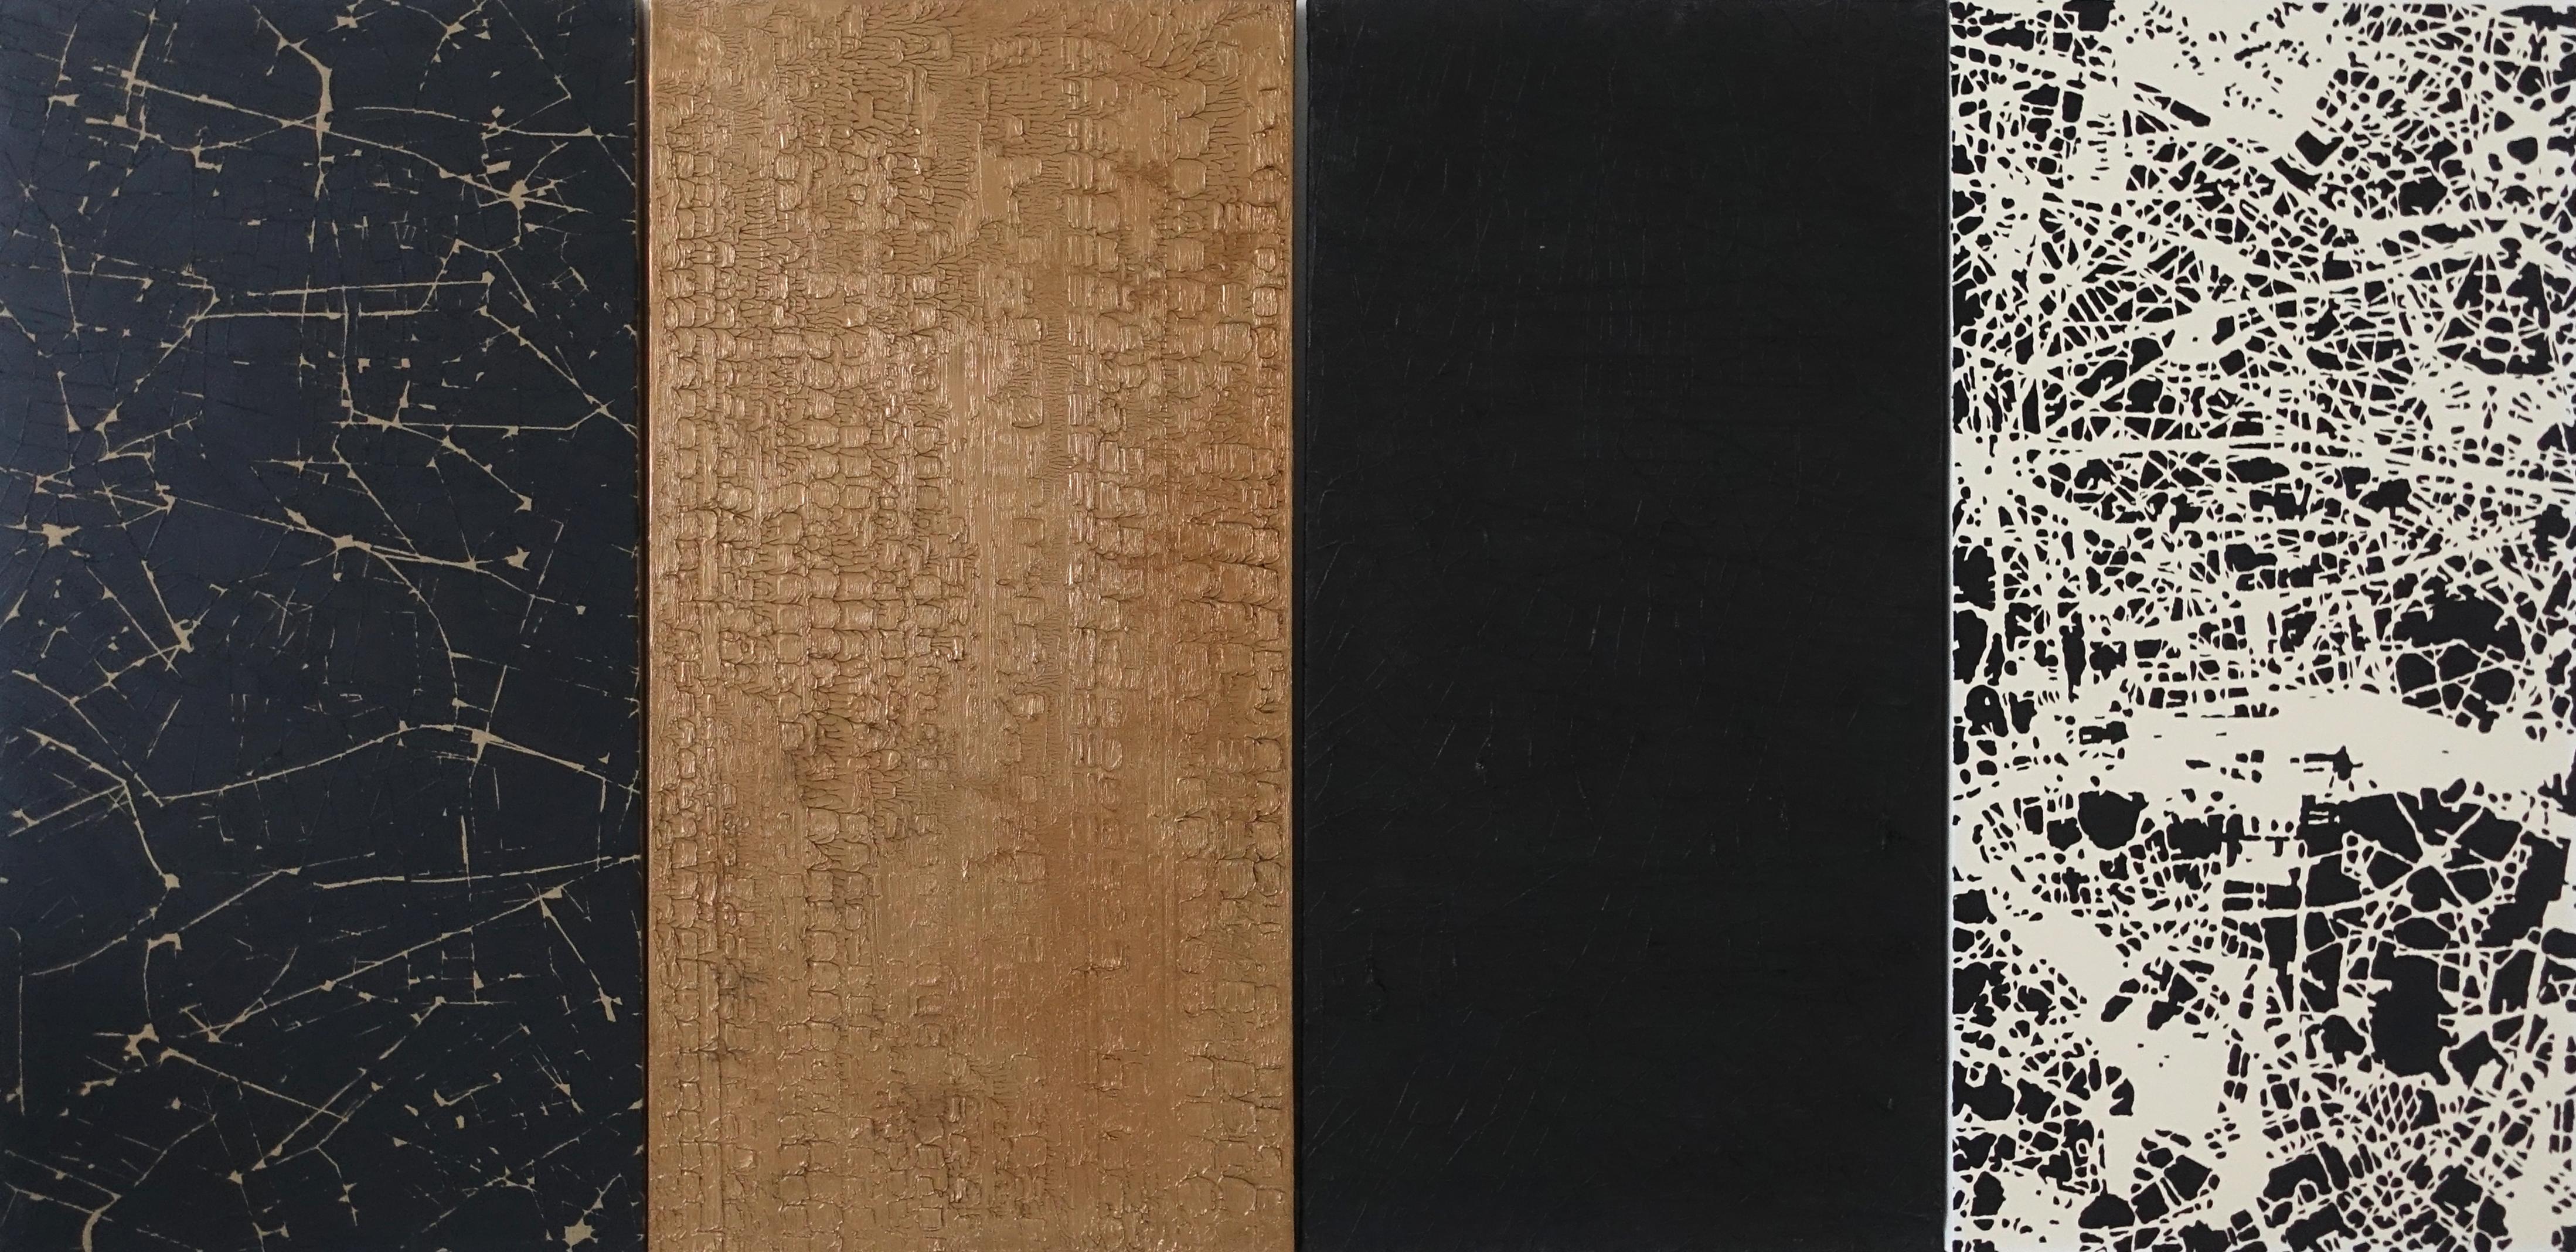 Abstract Painting Stanza - The Diversity of Agreements - Peinture à l'huile d'art abstrait contemporain